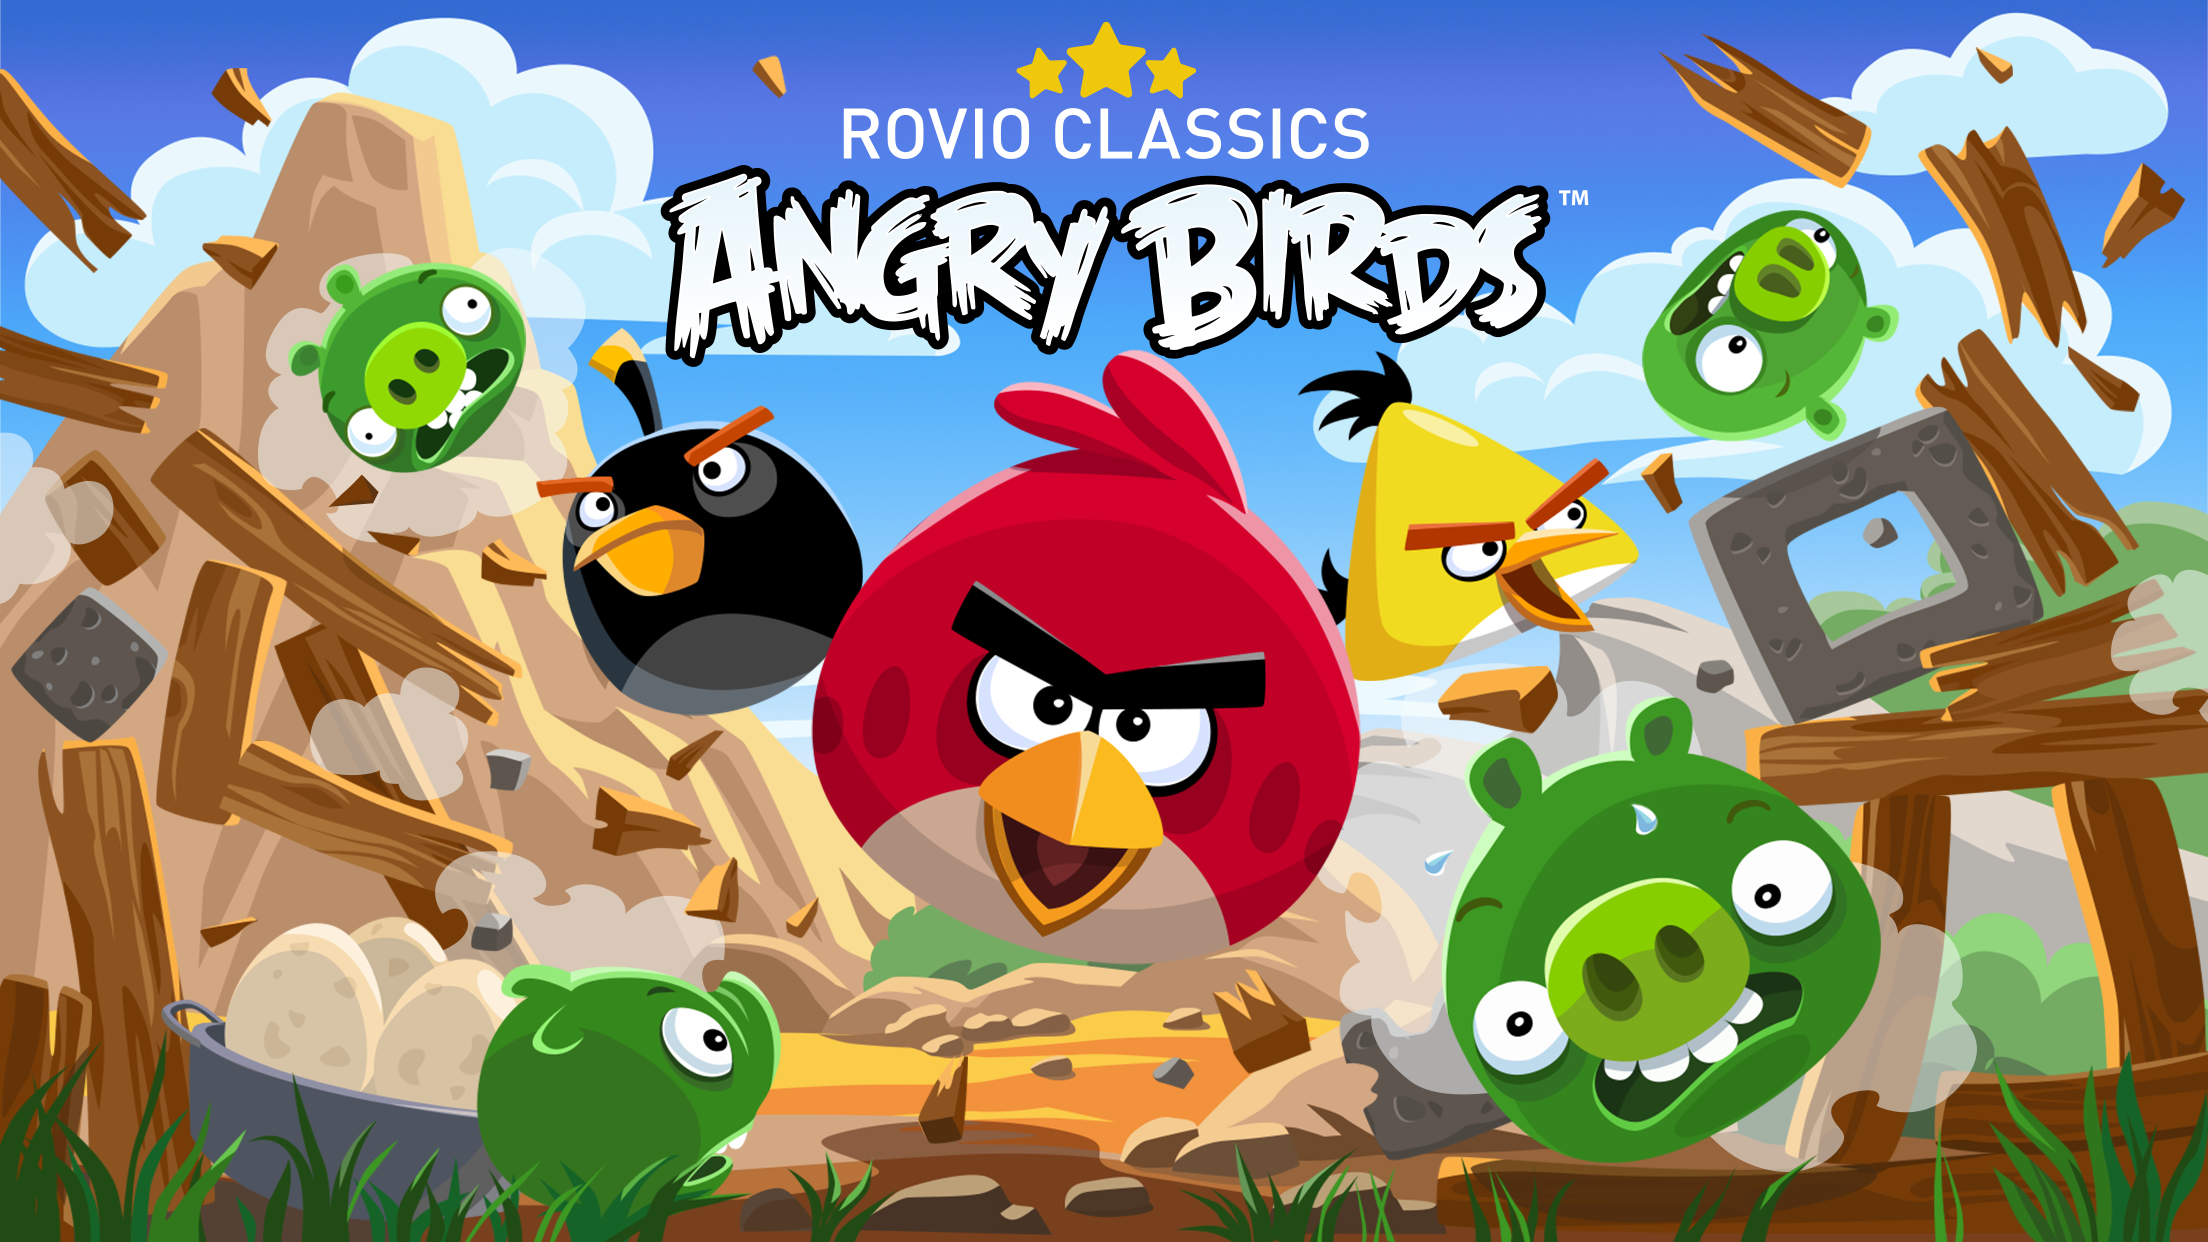 Download & Play Rovio Classics: AB on PC & Mac (Emulator)